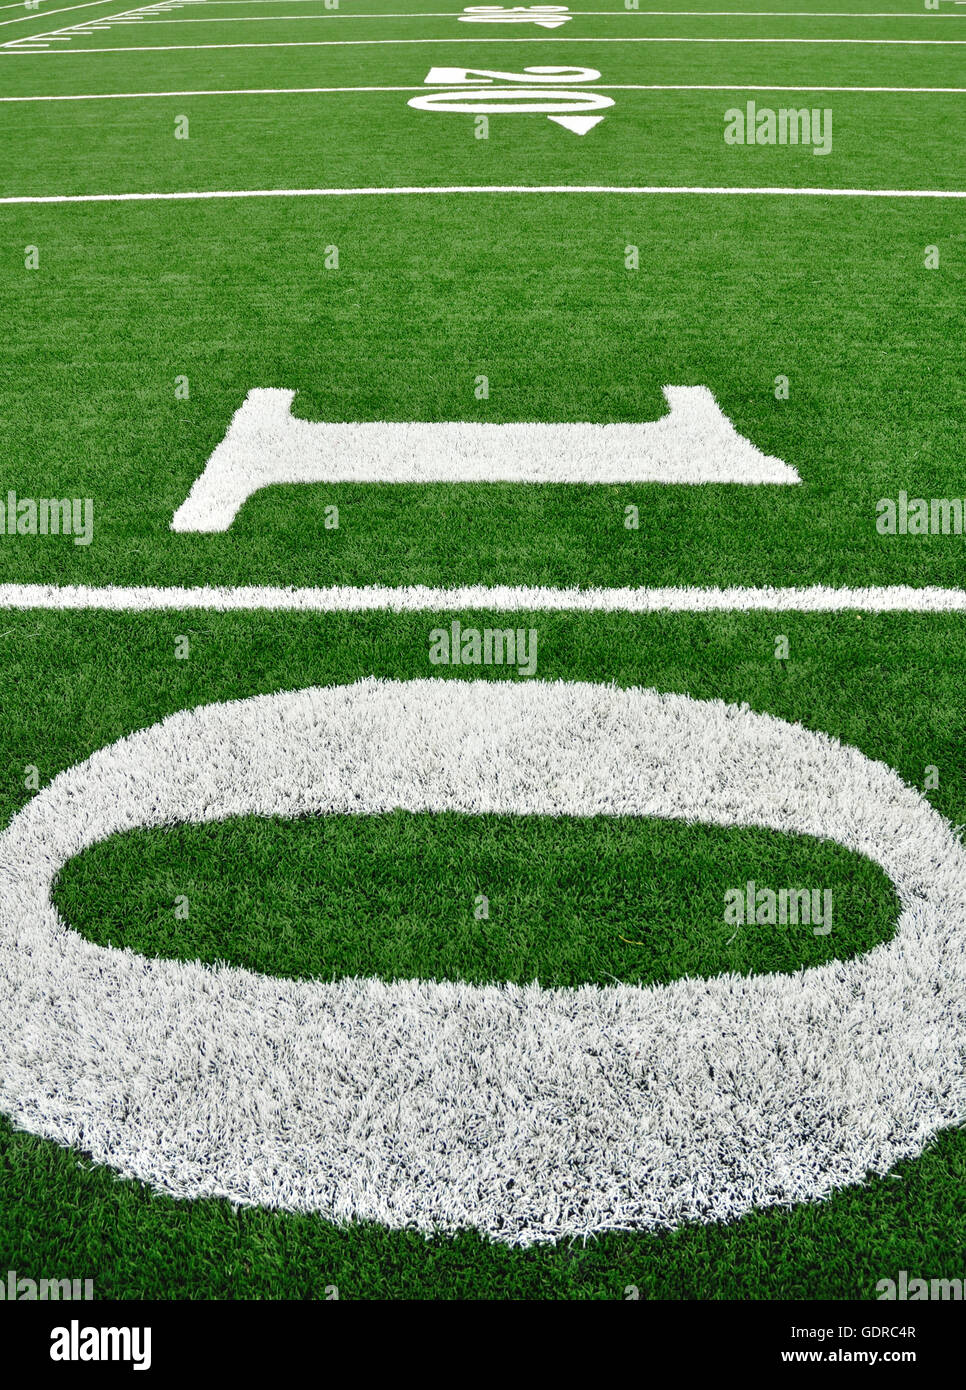 10, 20, & 30 Yard Line on American Football Field Stock Photo